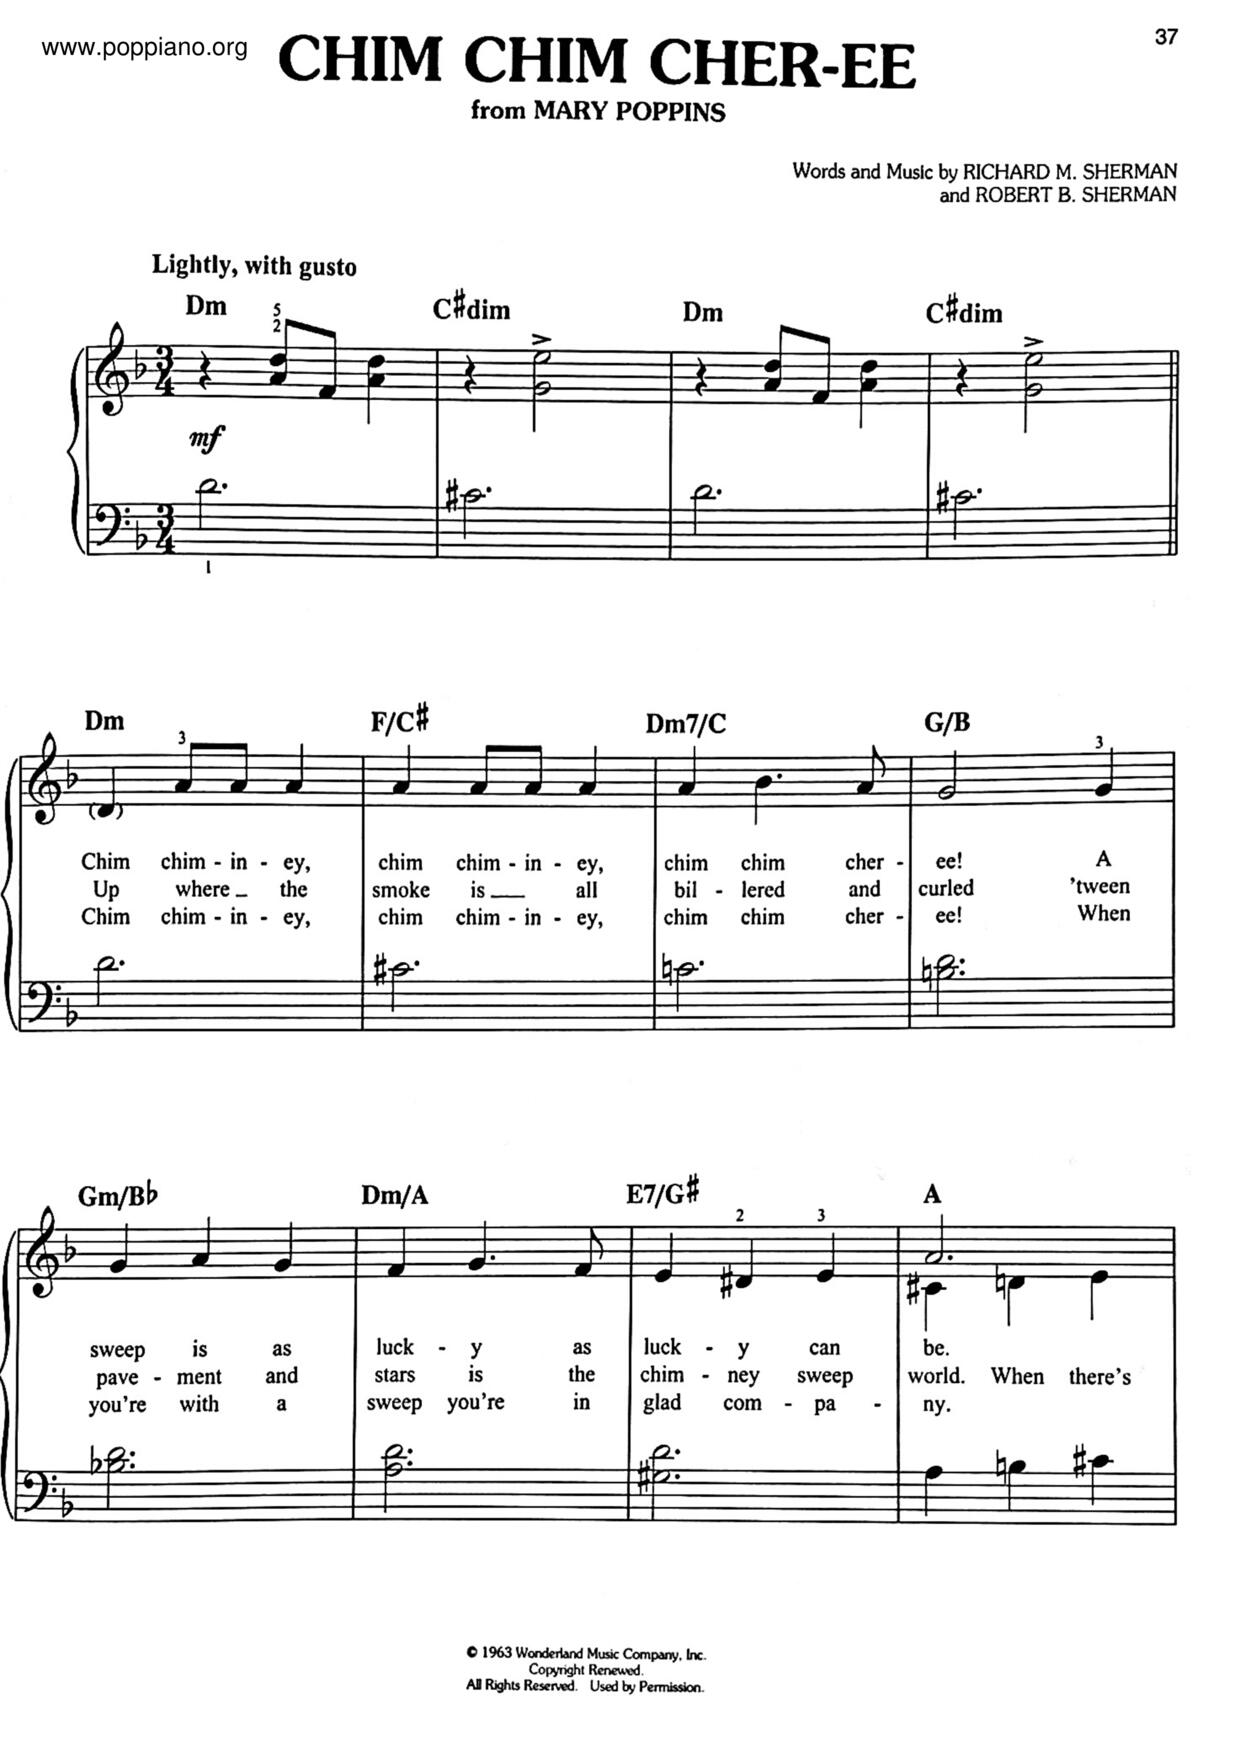 Mary Poppins - Chim Chim Cher-Ee Score